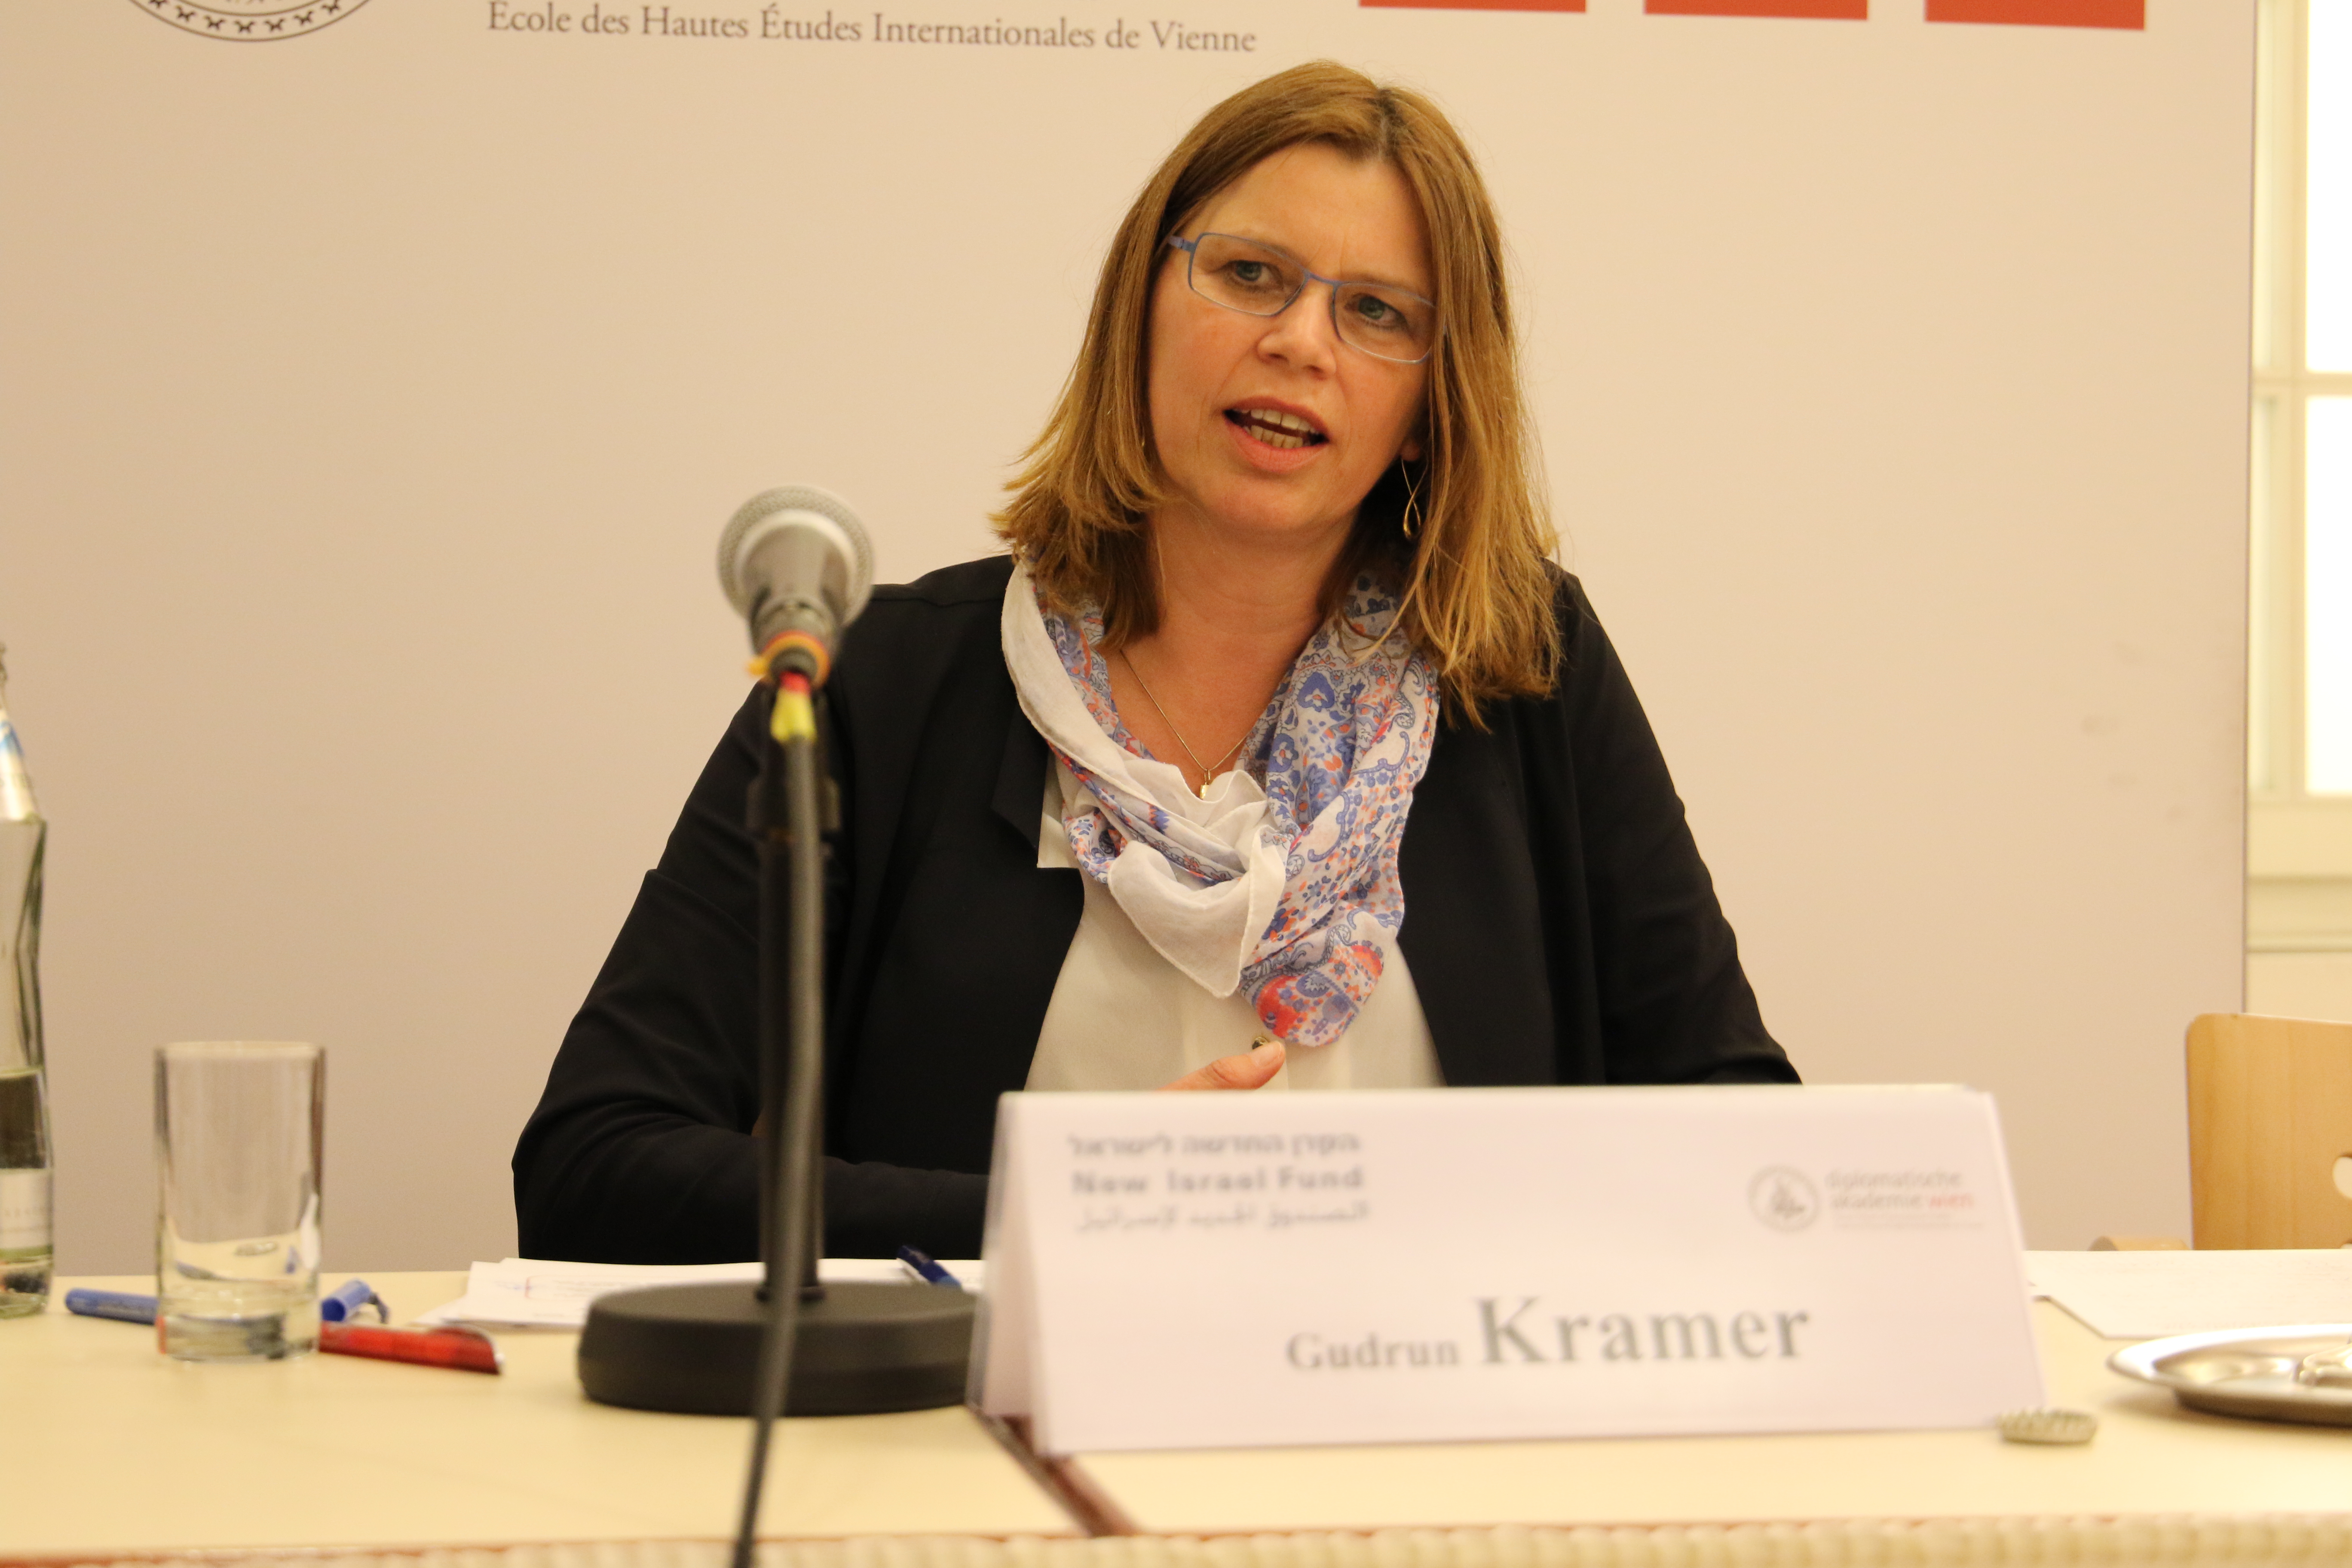 Gudrun Kramer, Director of ASPR